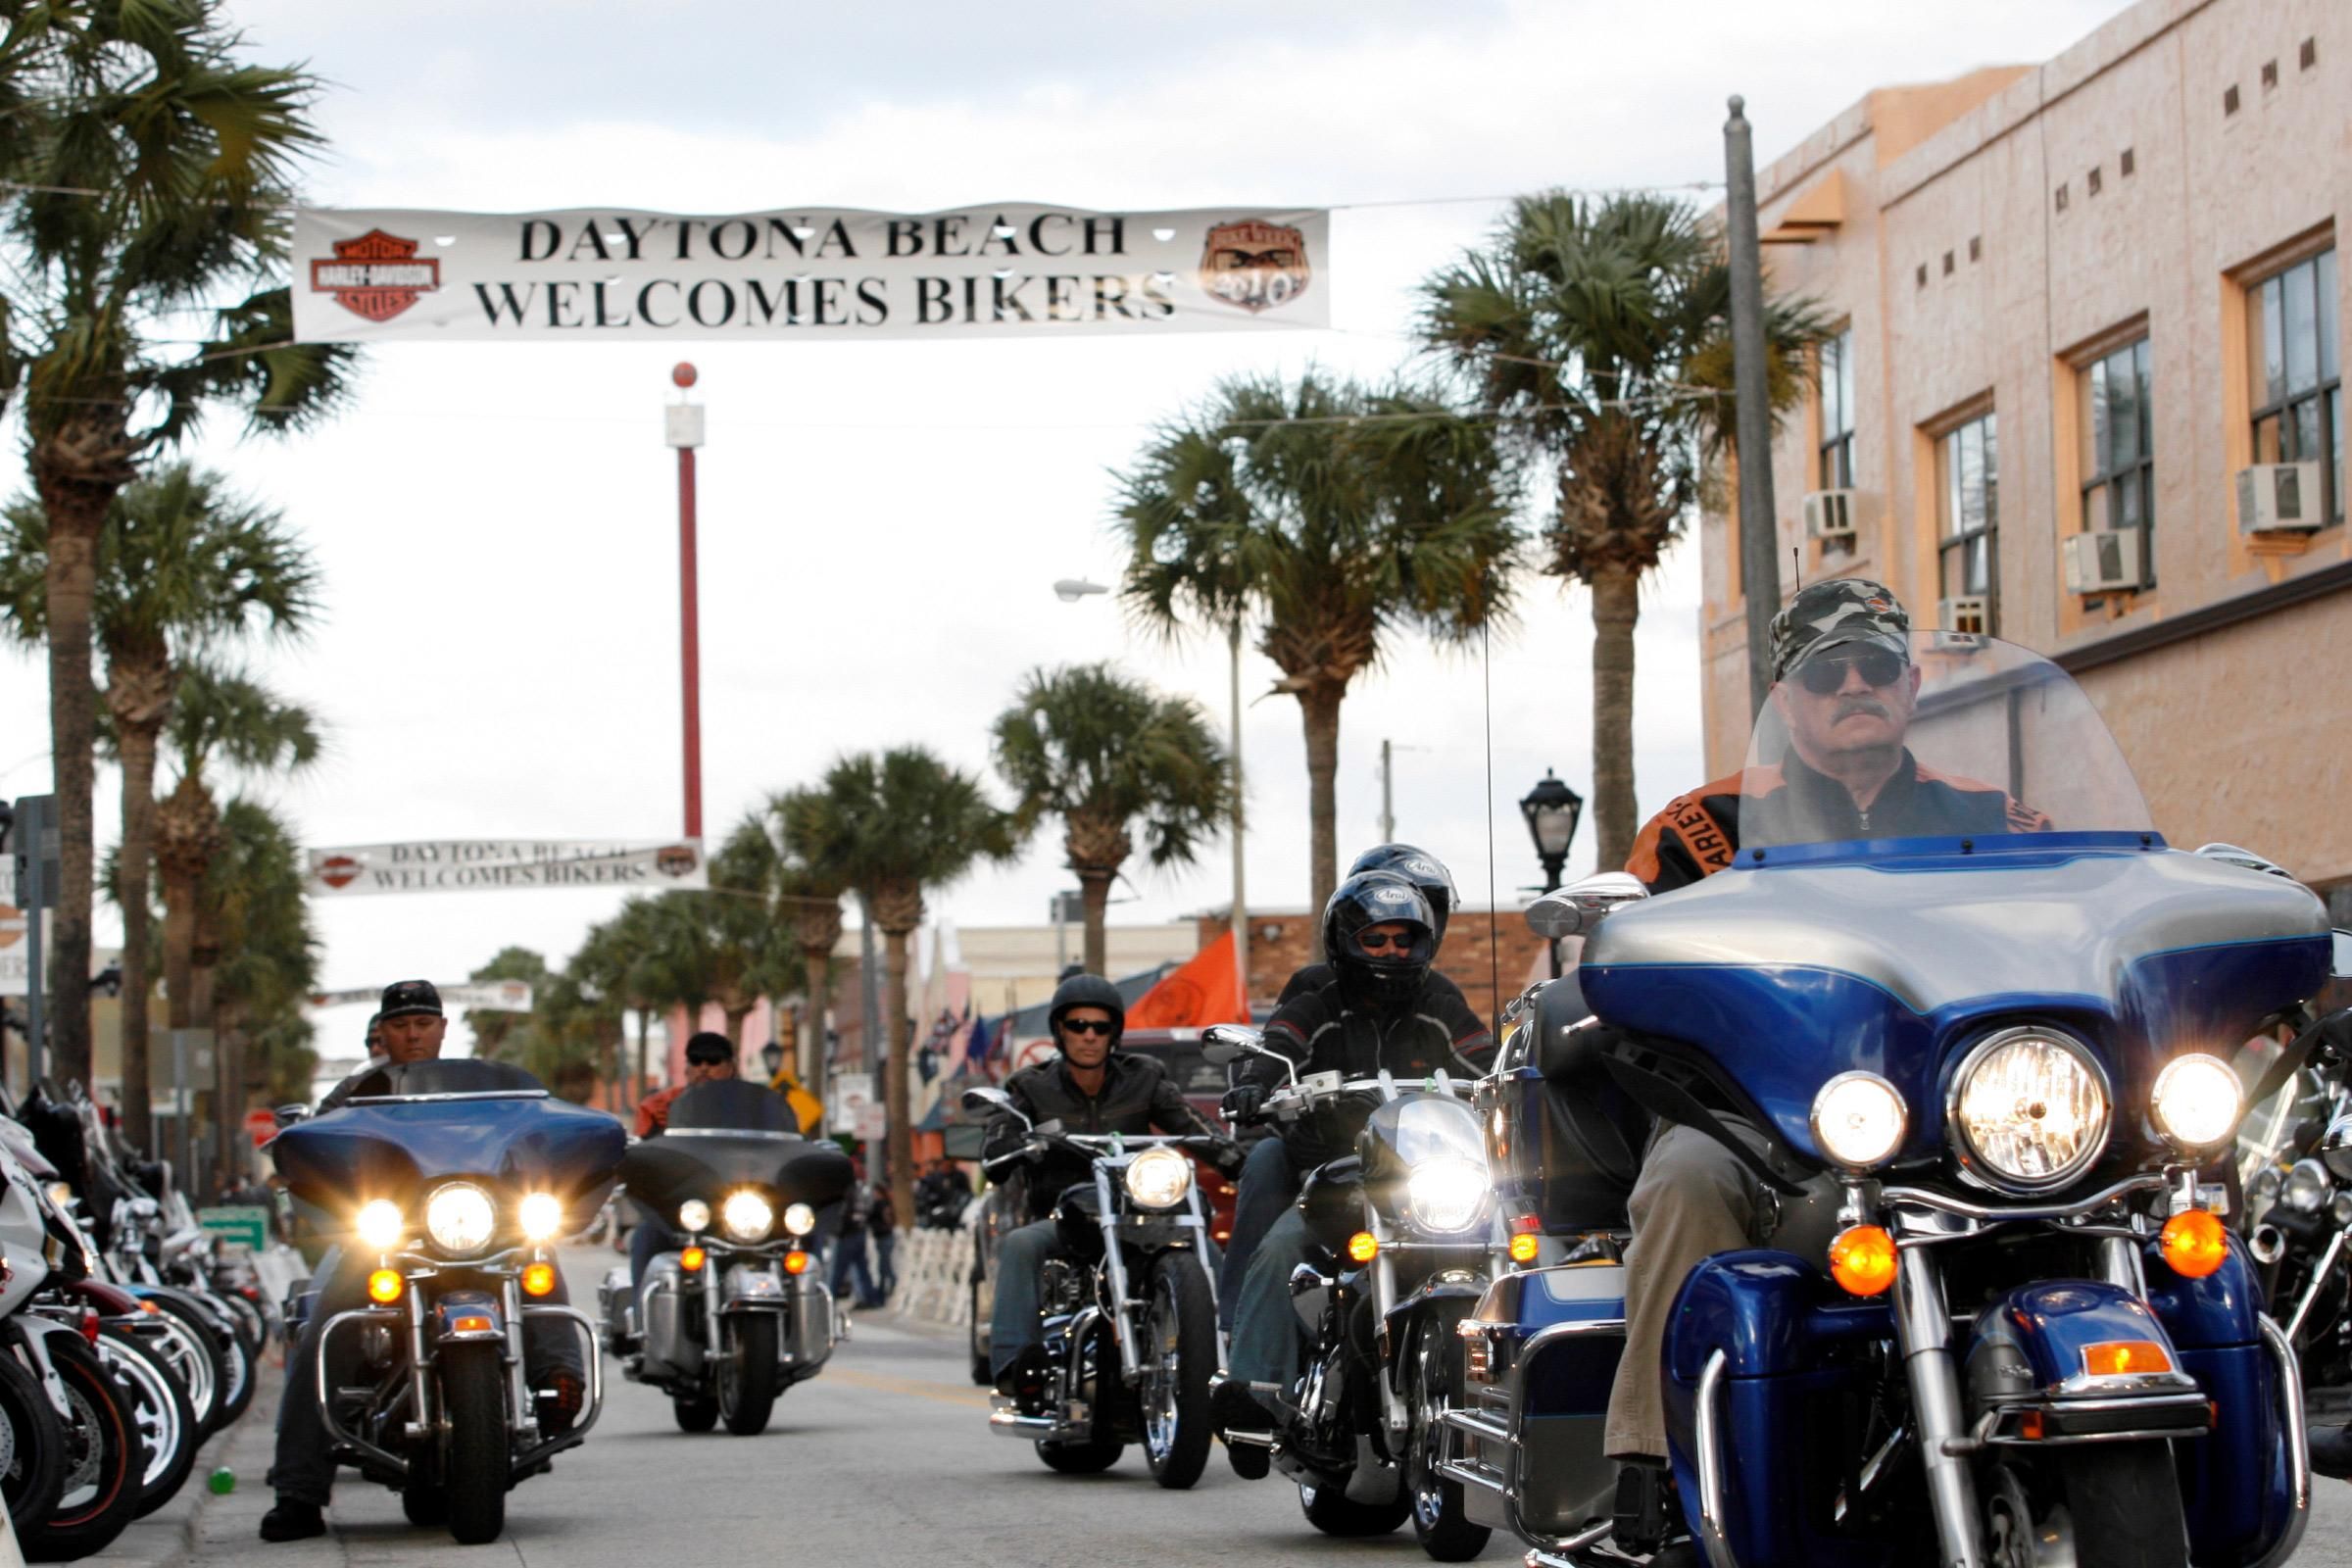 Harley-Davidson welcomes riders to Daytona Beach for Bike Week